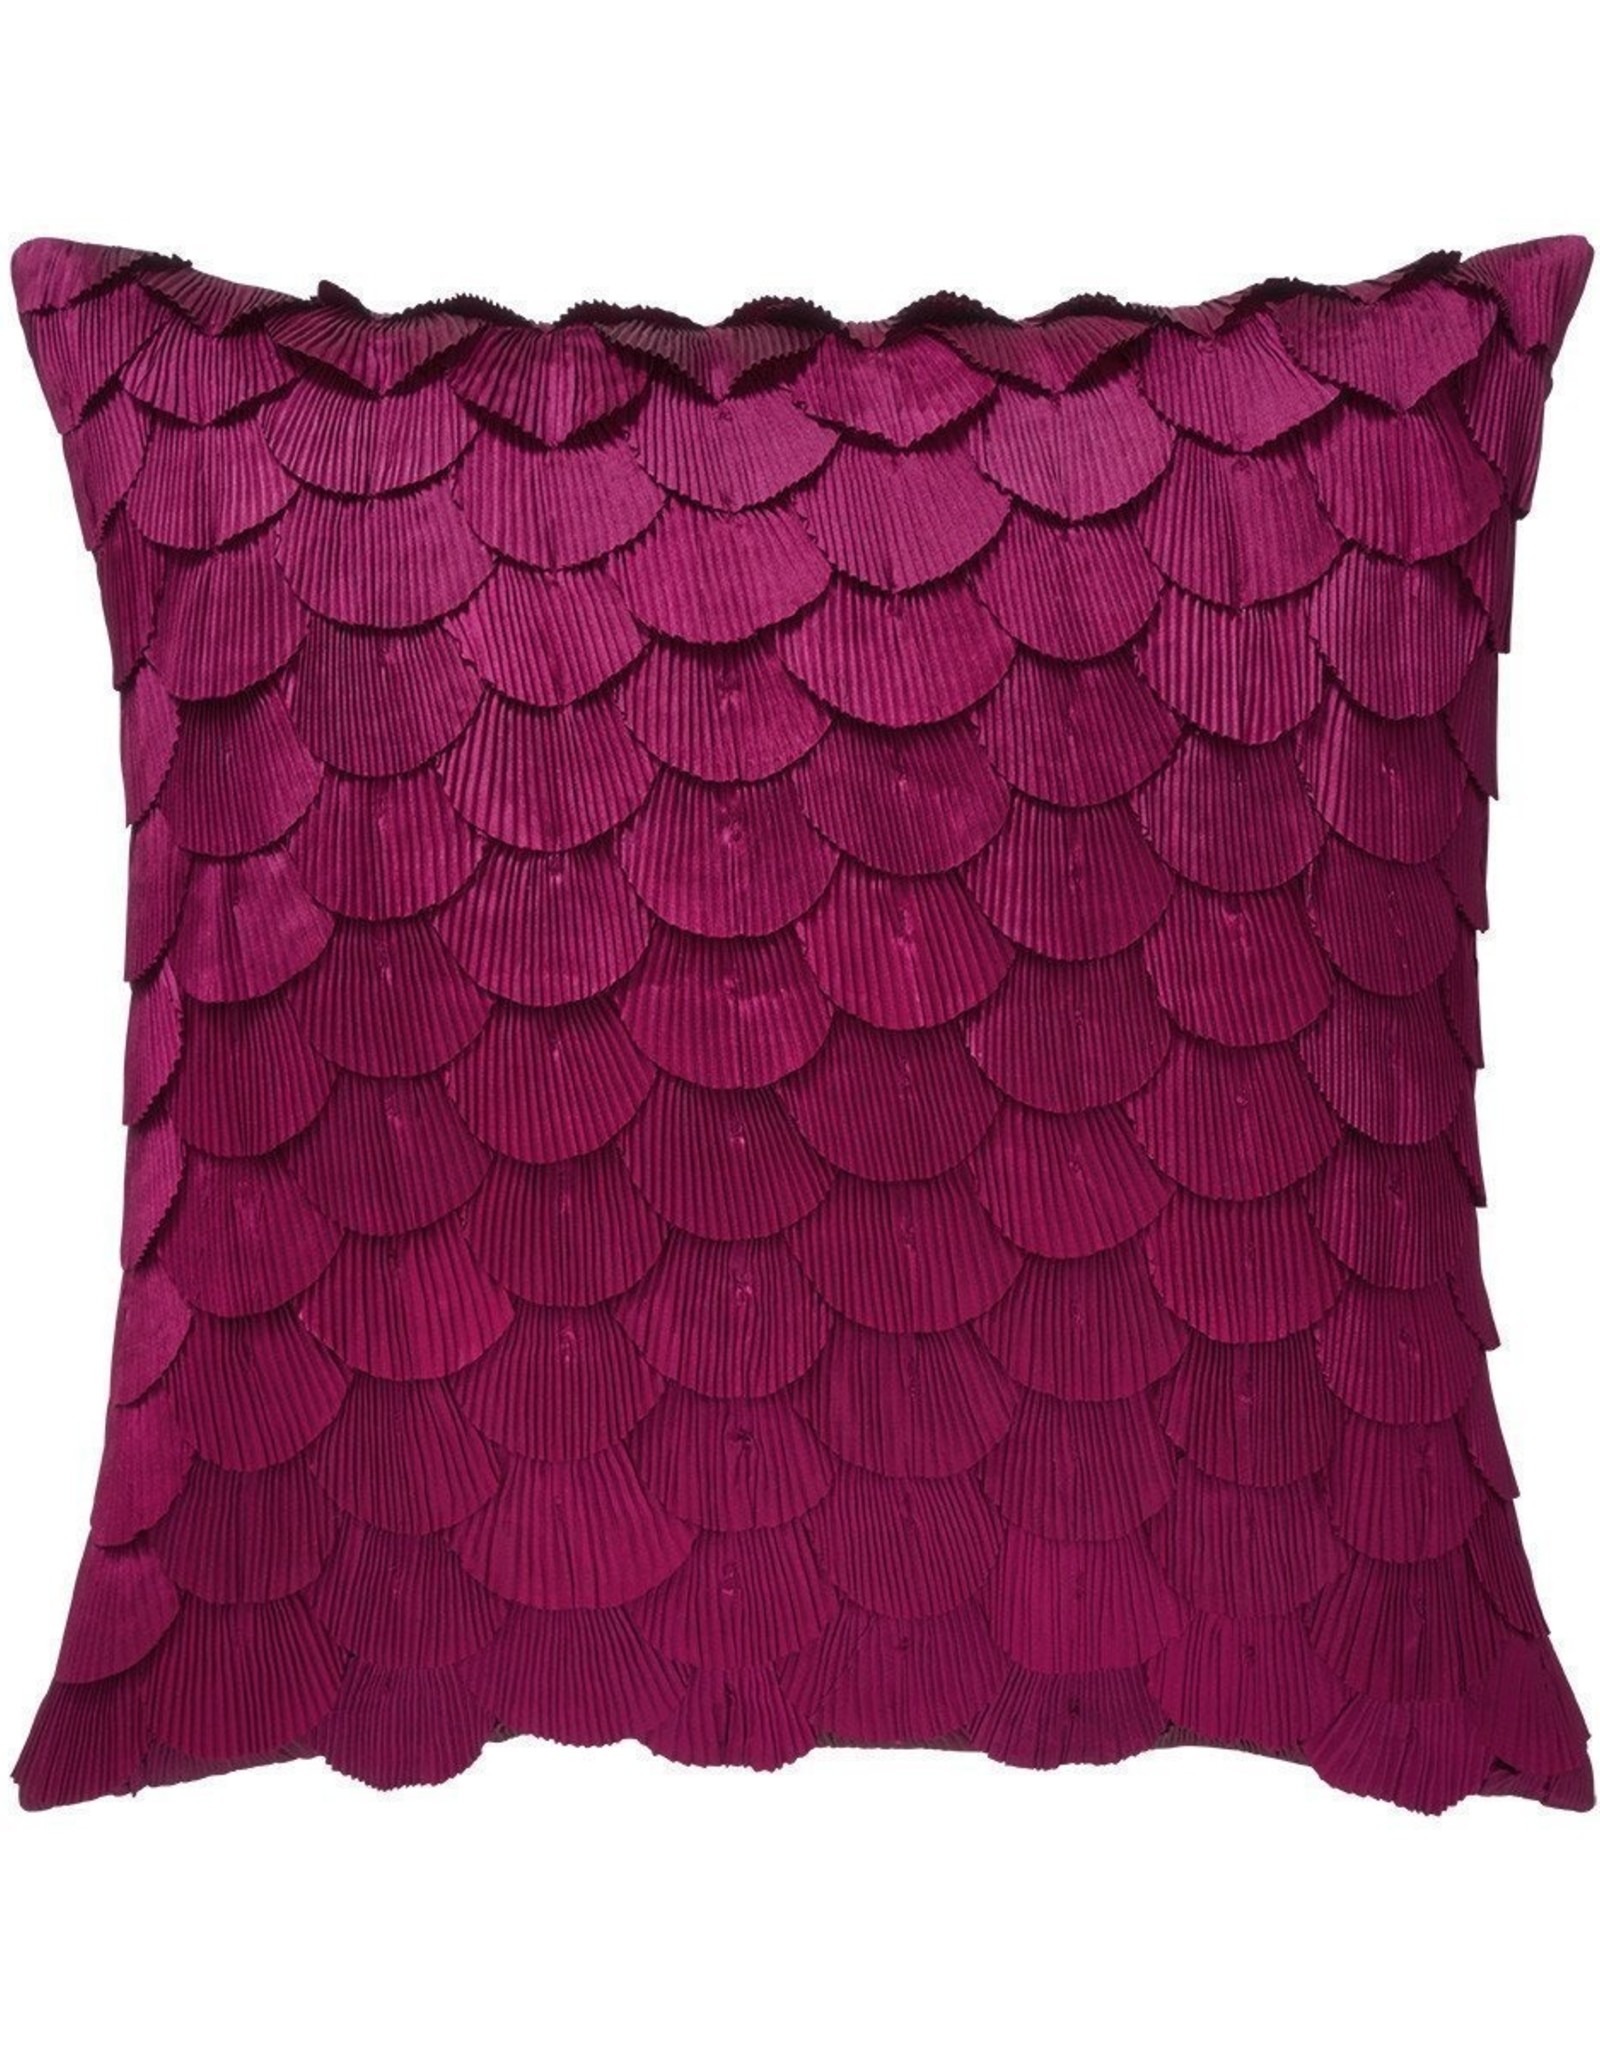 https://cdn.shoplightspeed.com/shops/621351/files/23921717/1600x2048x1/yves-delorme-ombelle-decorative-pillows.jpg